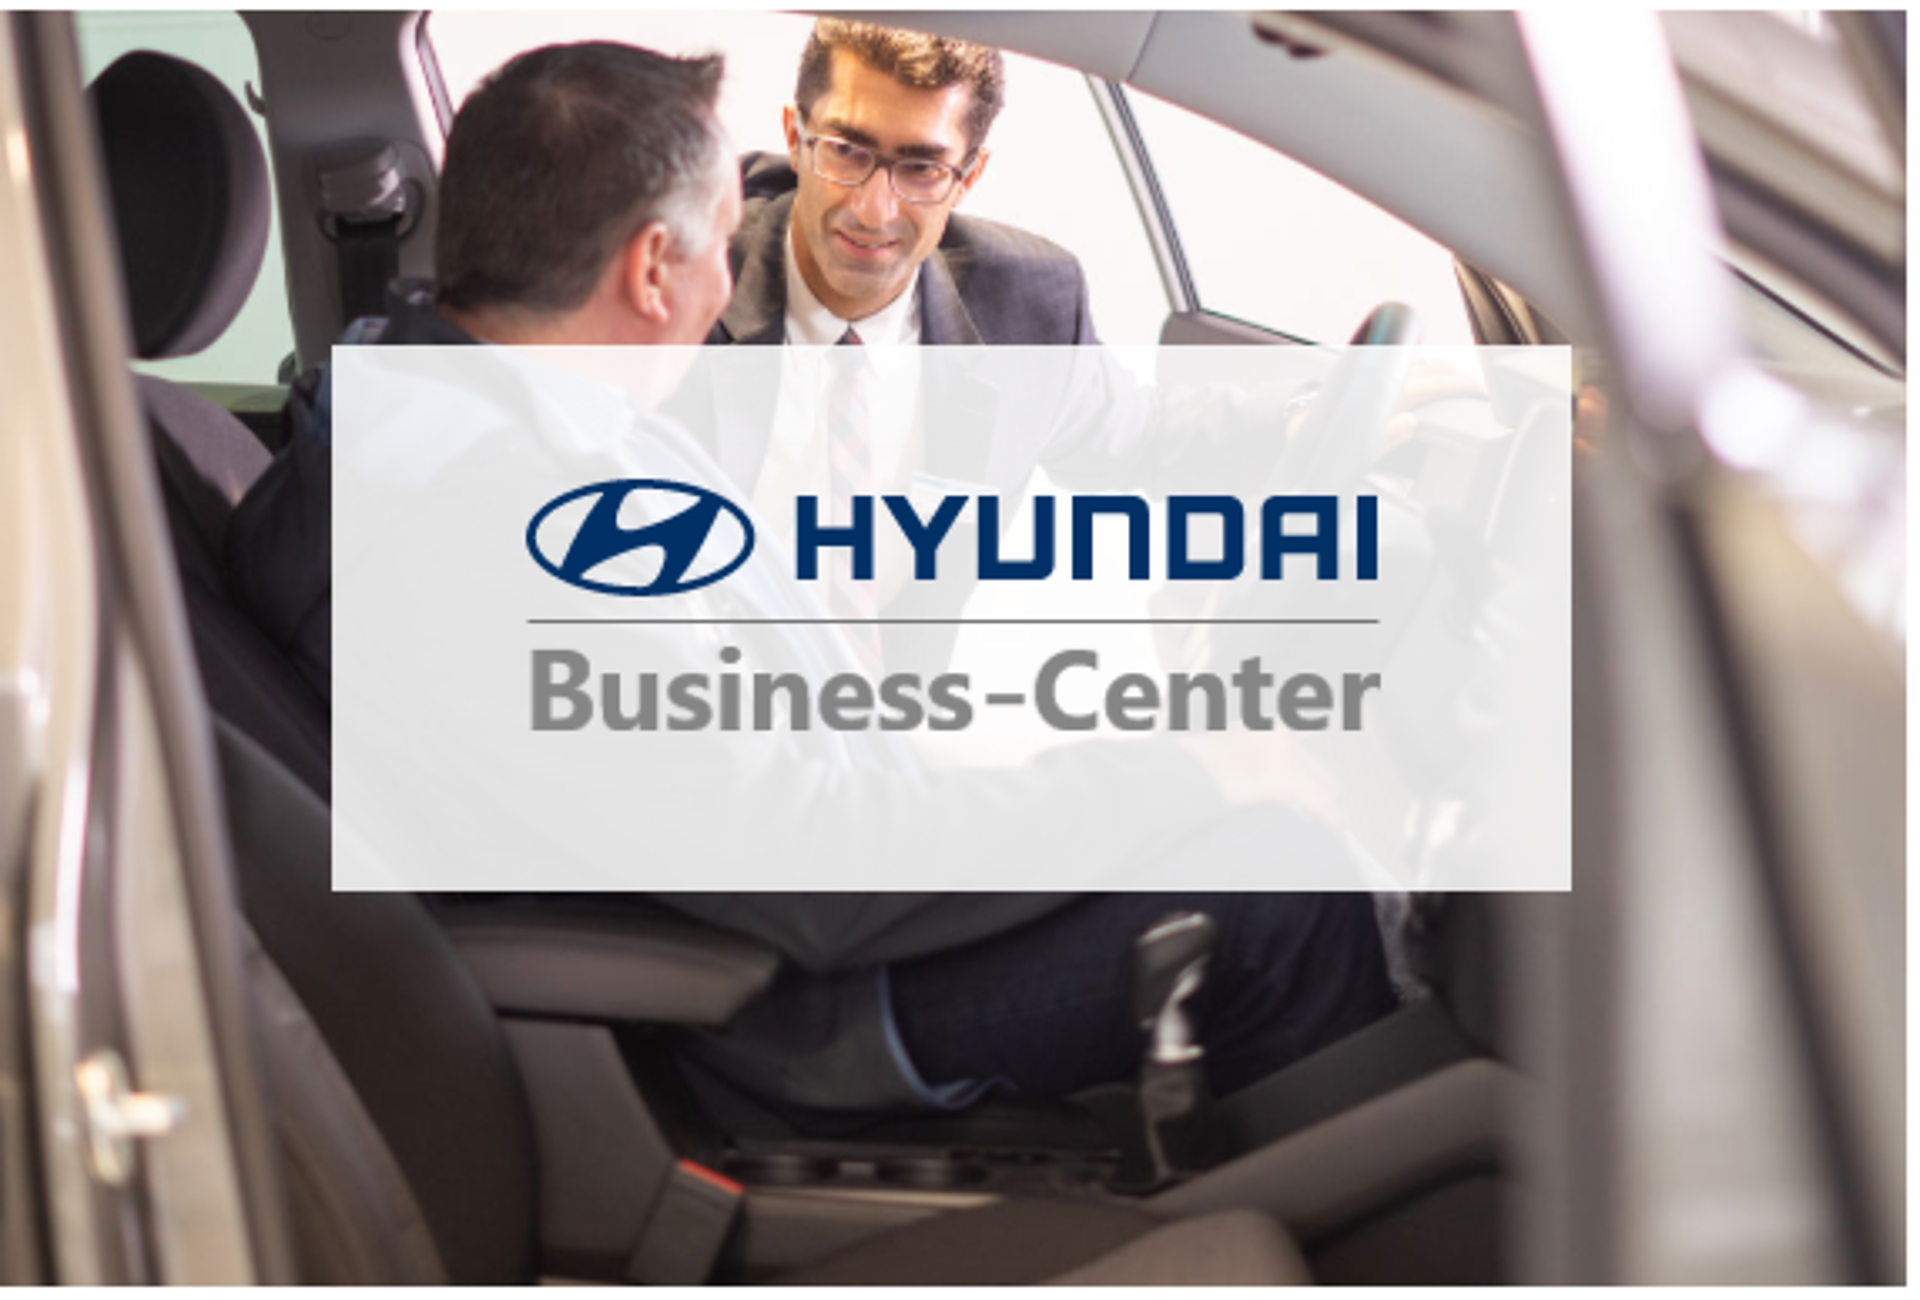 Hyundai Business-Center - Emil Frey Hessengarage 